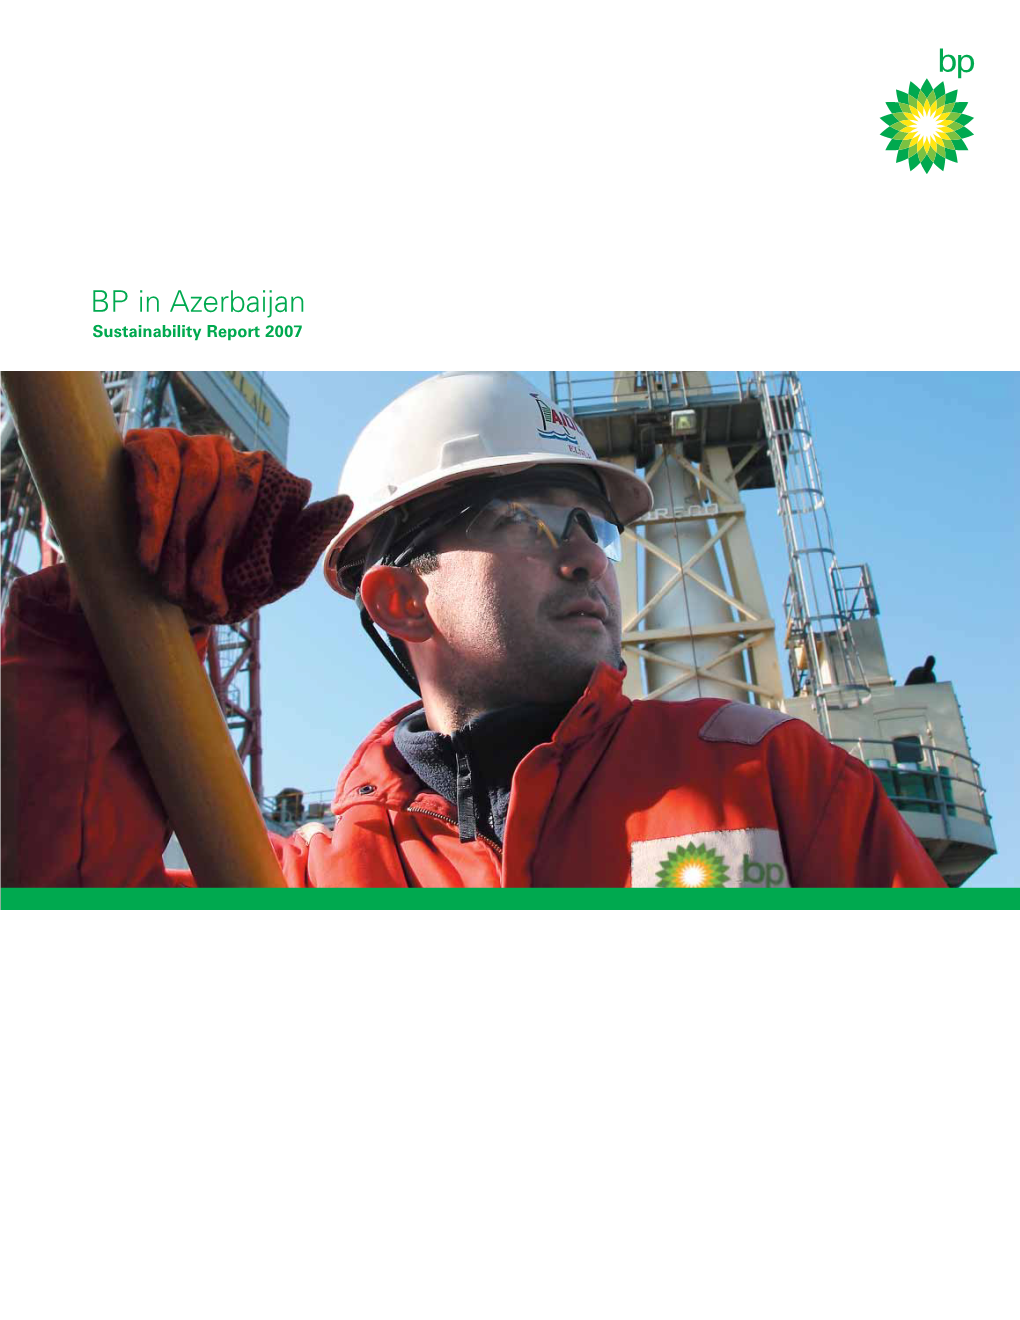 BP in Azerbaijan Sustainability Report 2007